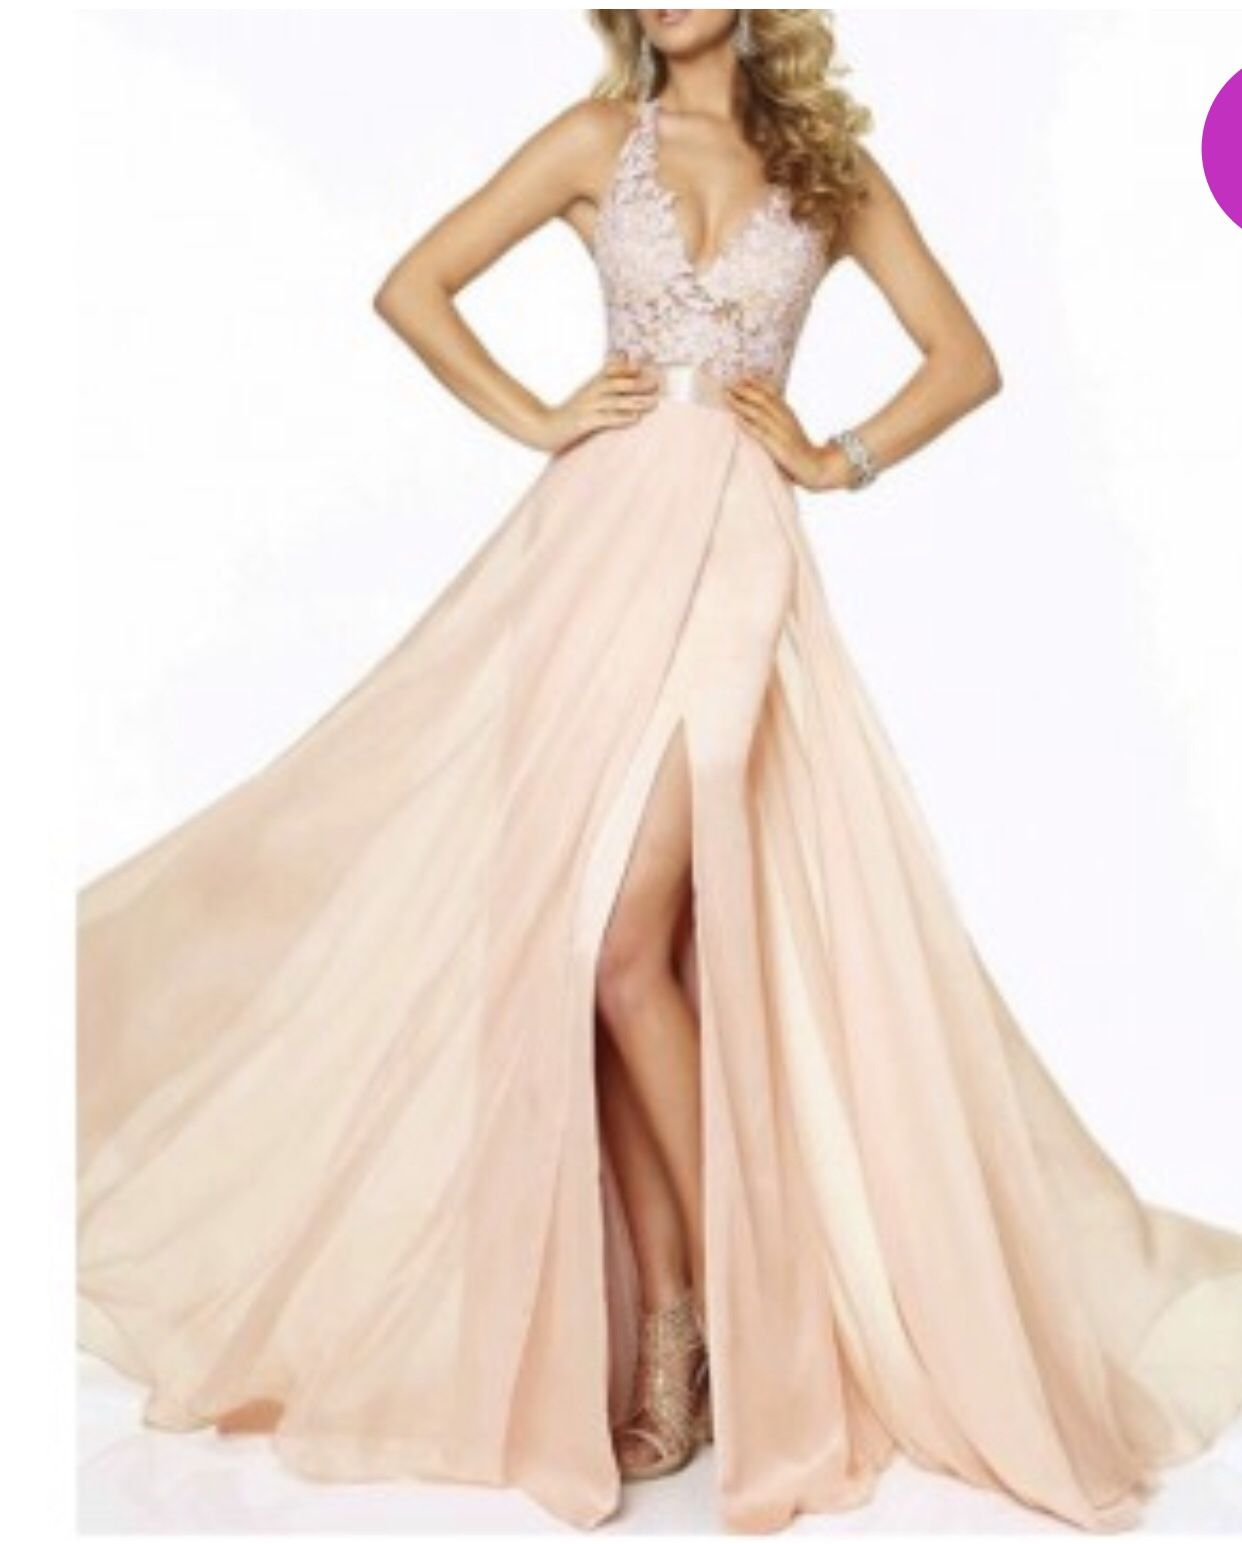 Blush pink prom dress